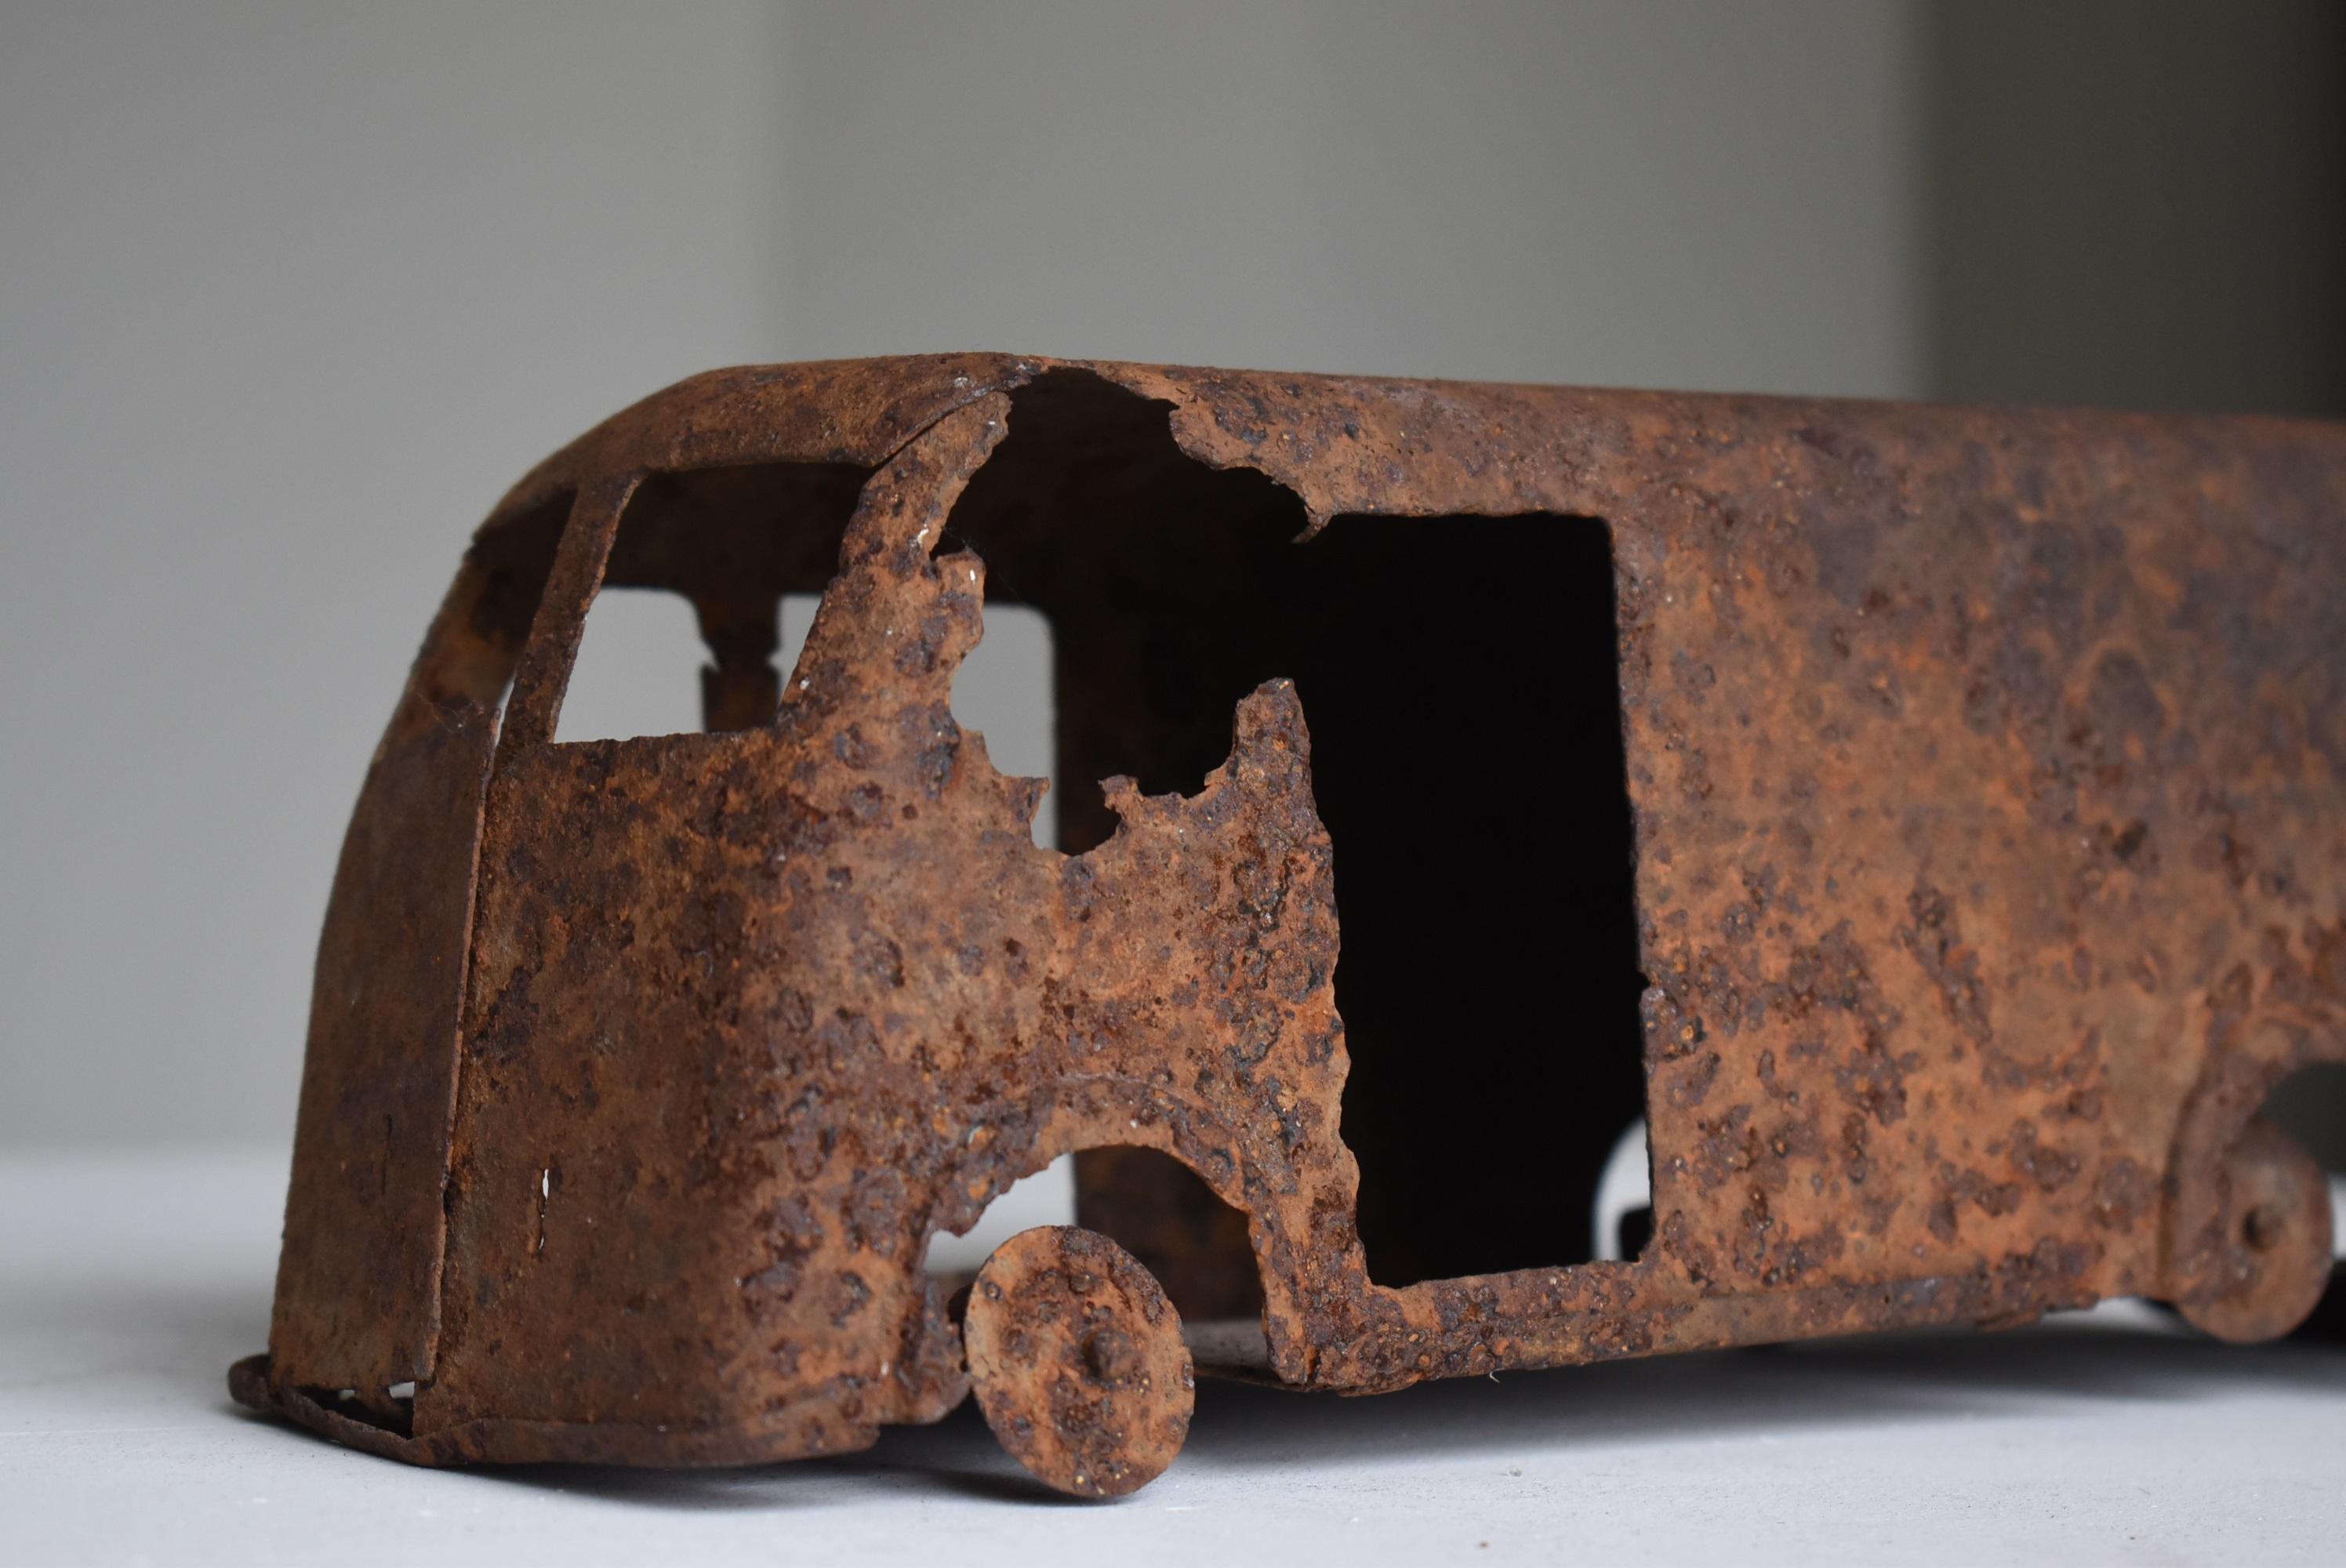 Showa Japanese Old Rusted Car Toys 1940s-1970s/Vintage Iron Object Figurine Wabisabi